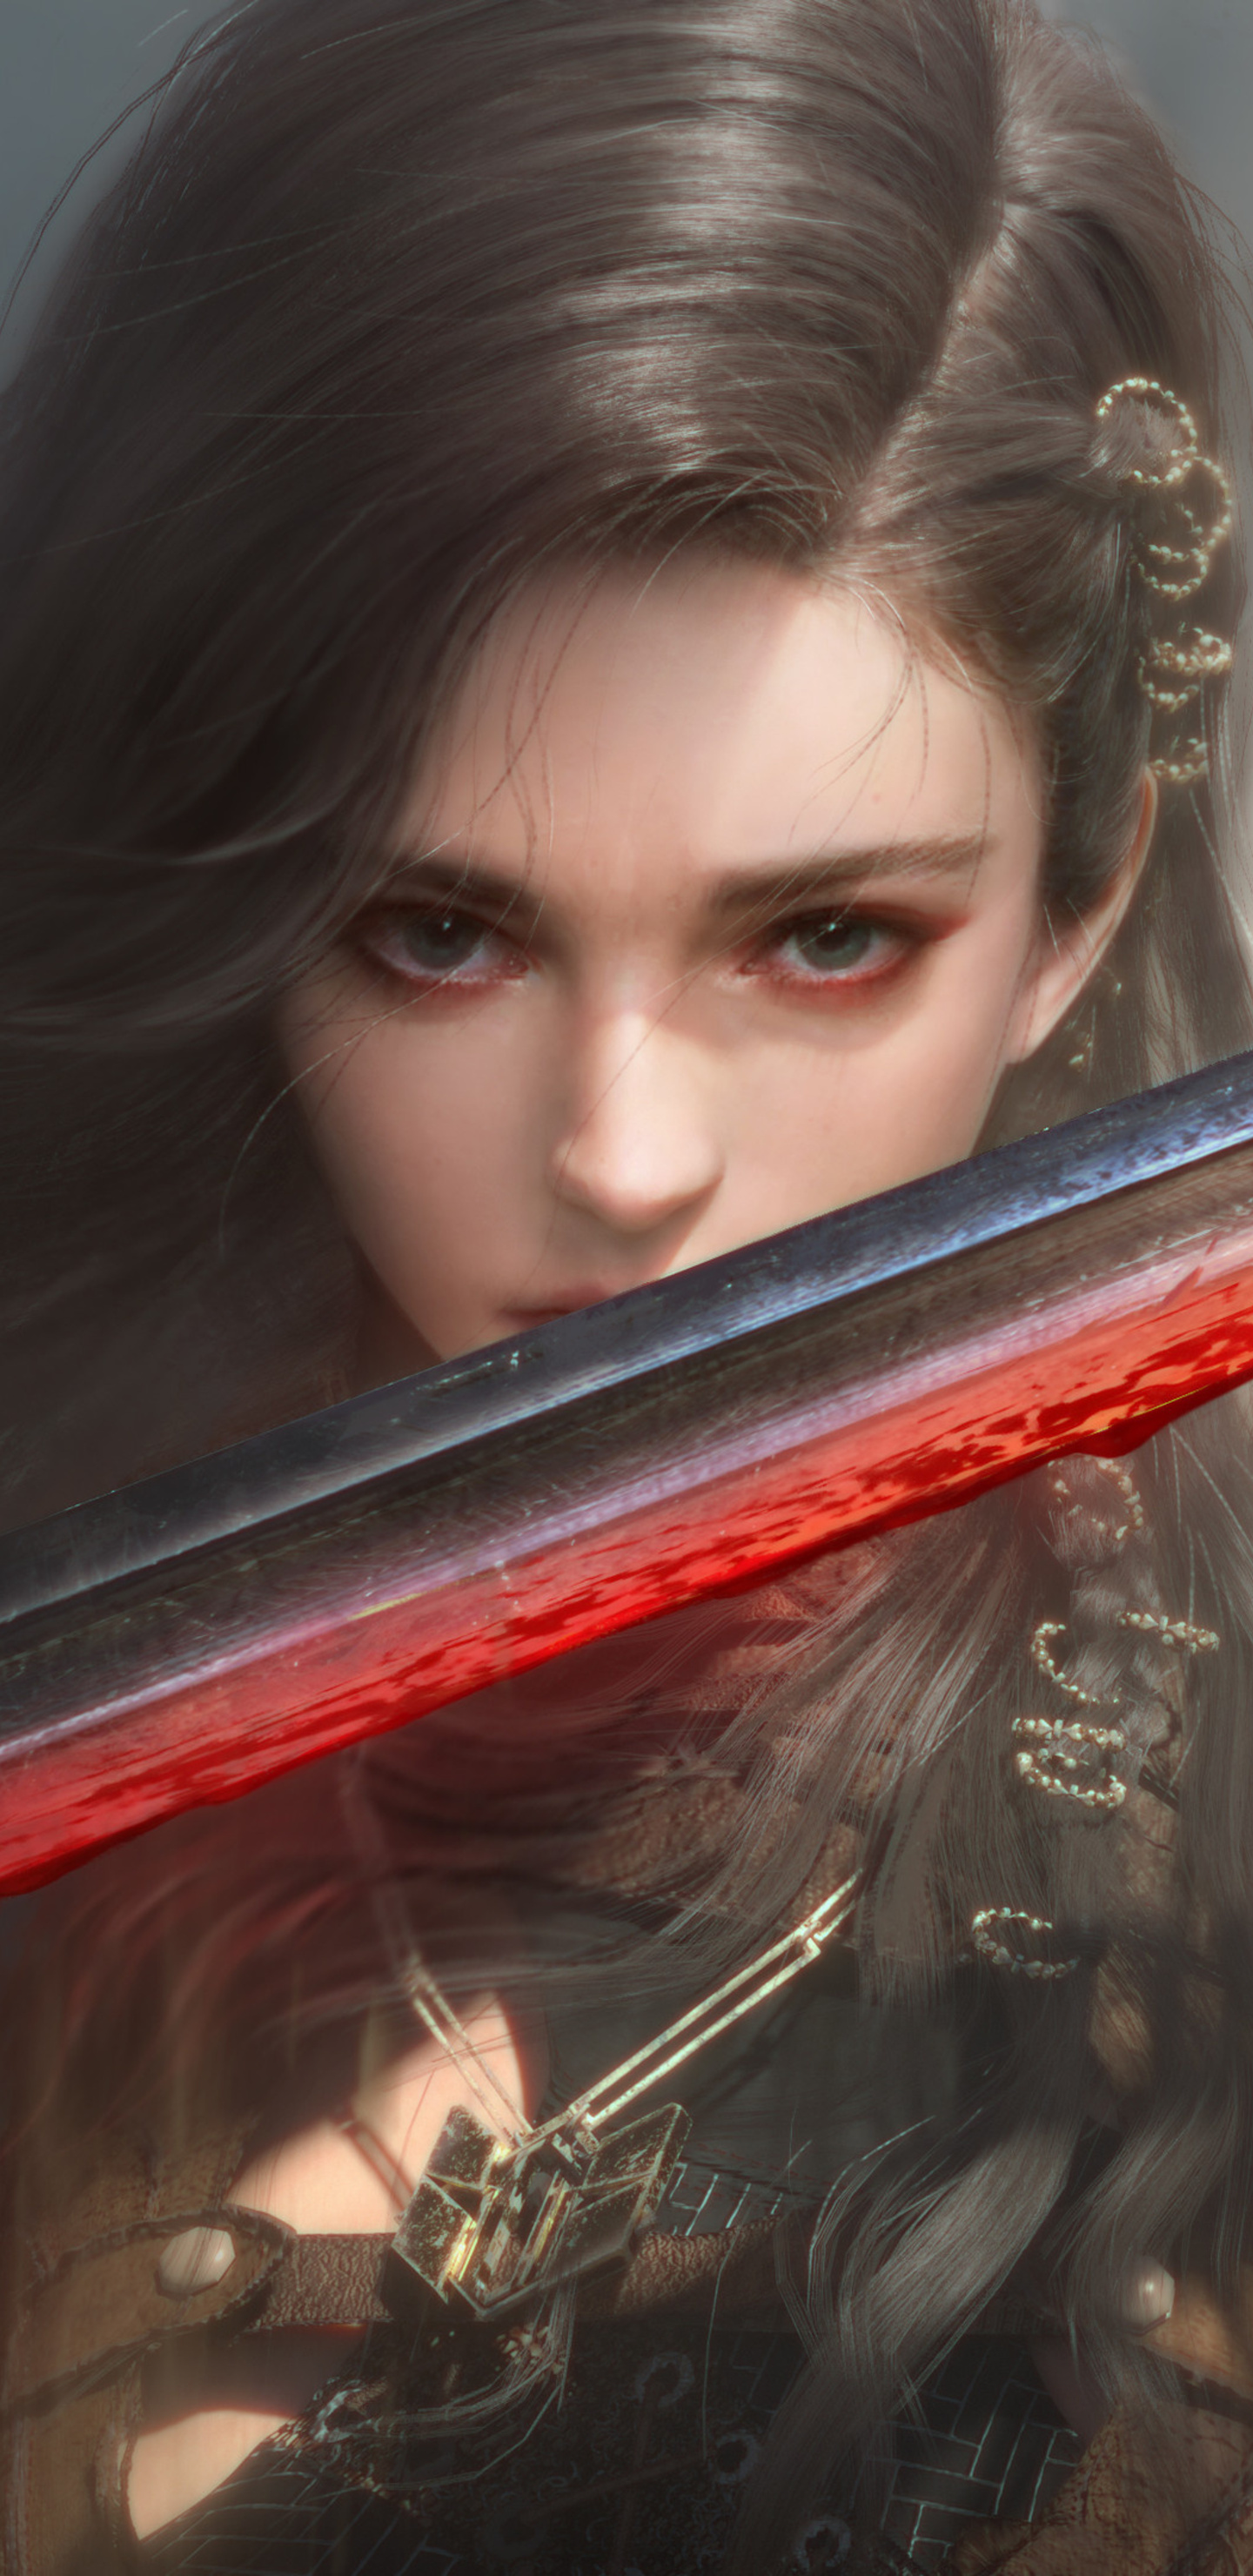 female-warrior-fantasy-with-sword-90.jpg